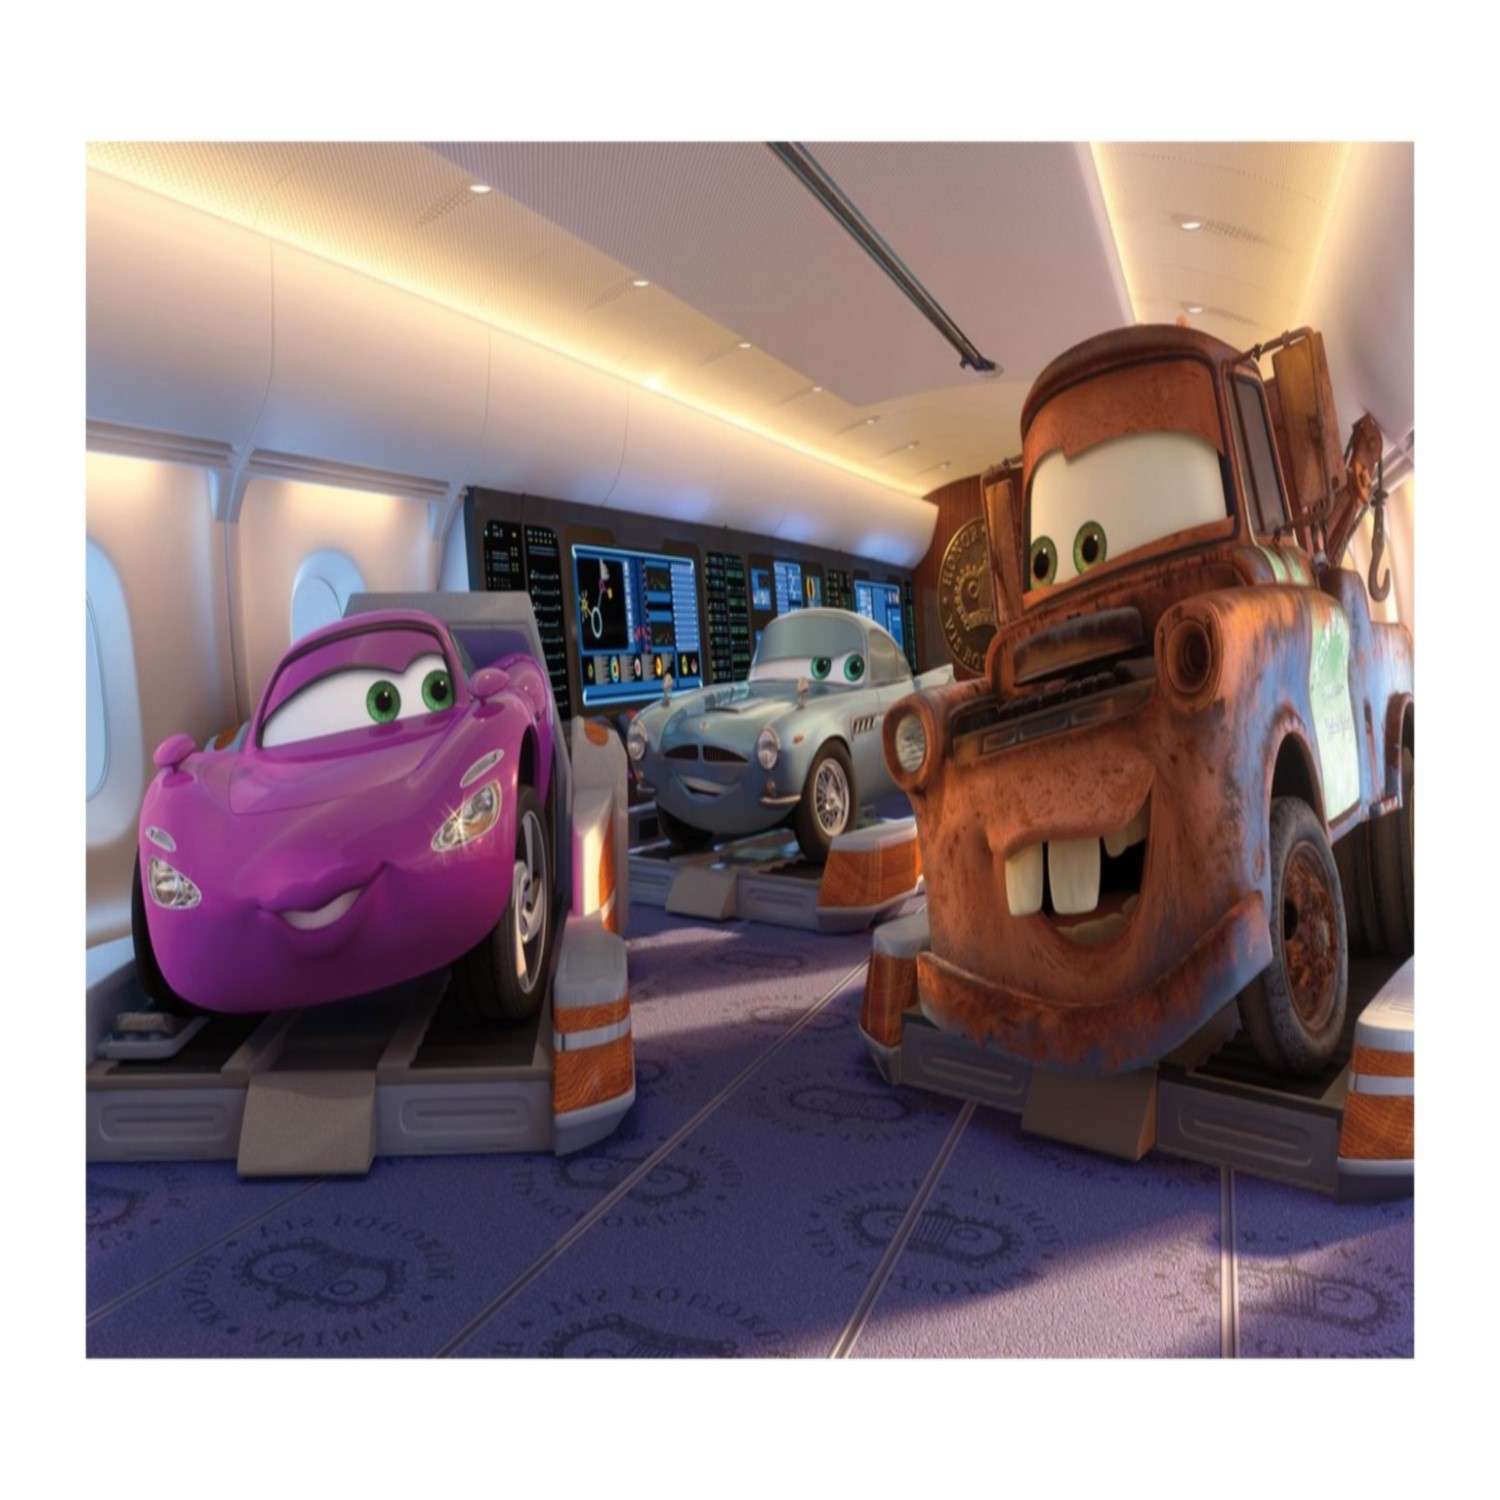 Подставка-табуретик Disney Cars - фото 11